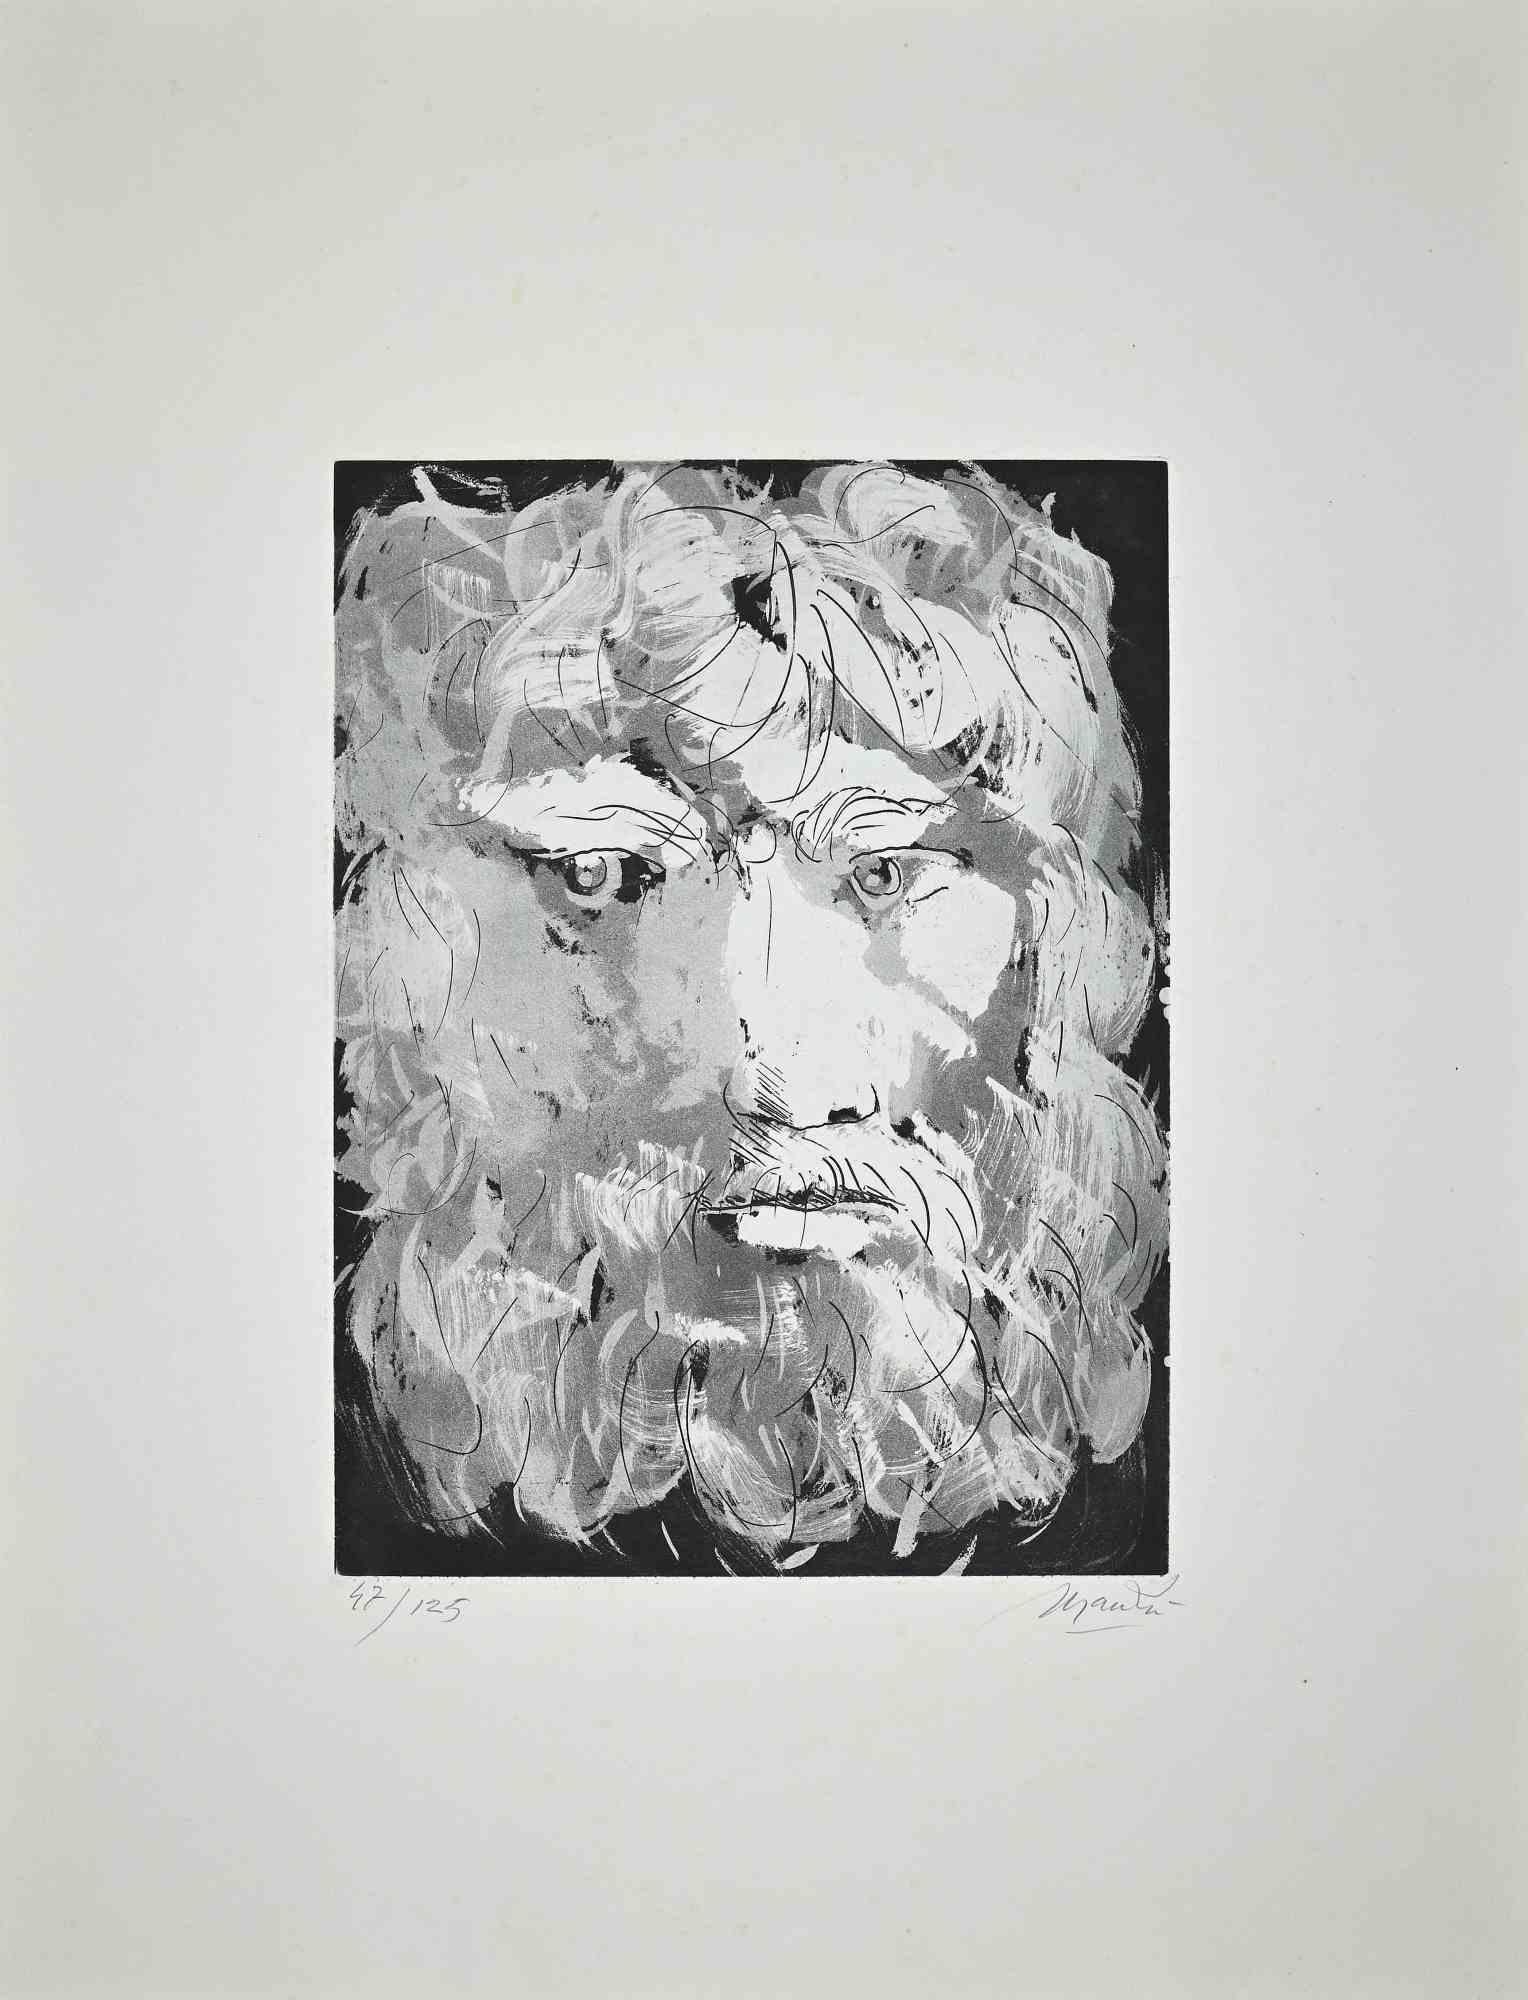 Giacomo Manzú Figurative Print - Portrait of King Oedipus  - Etching by Giacomo Manzù - 1970